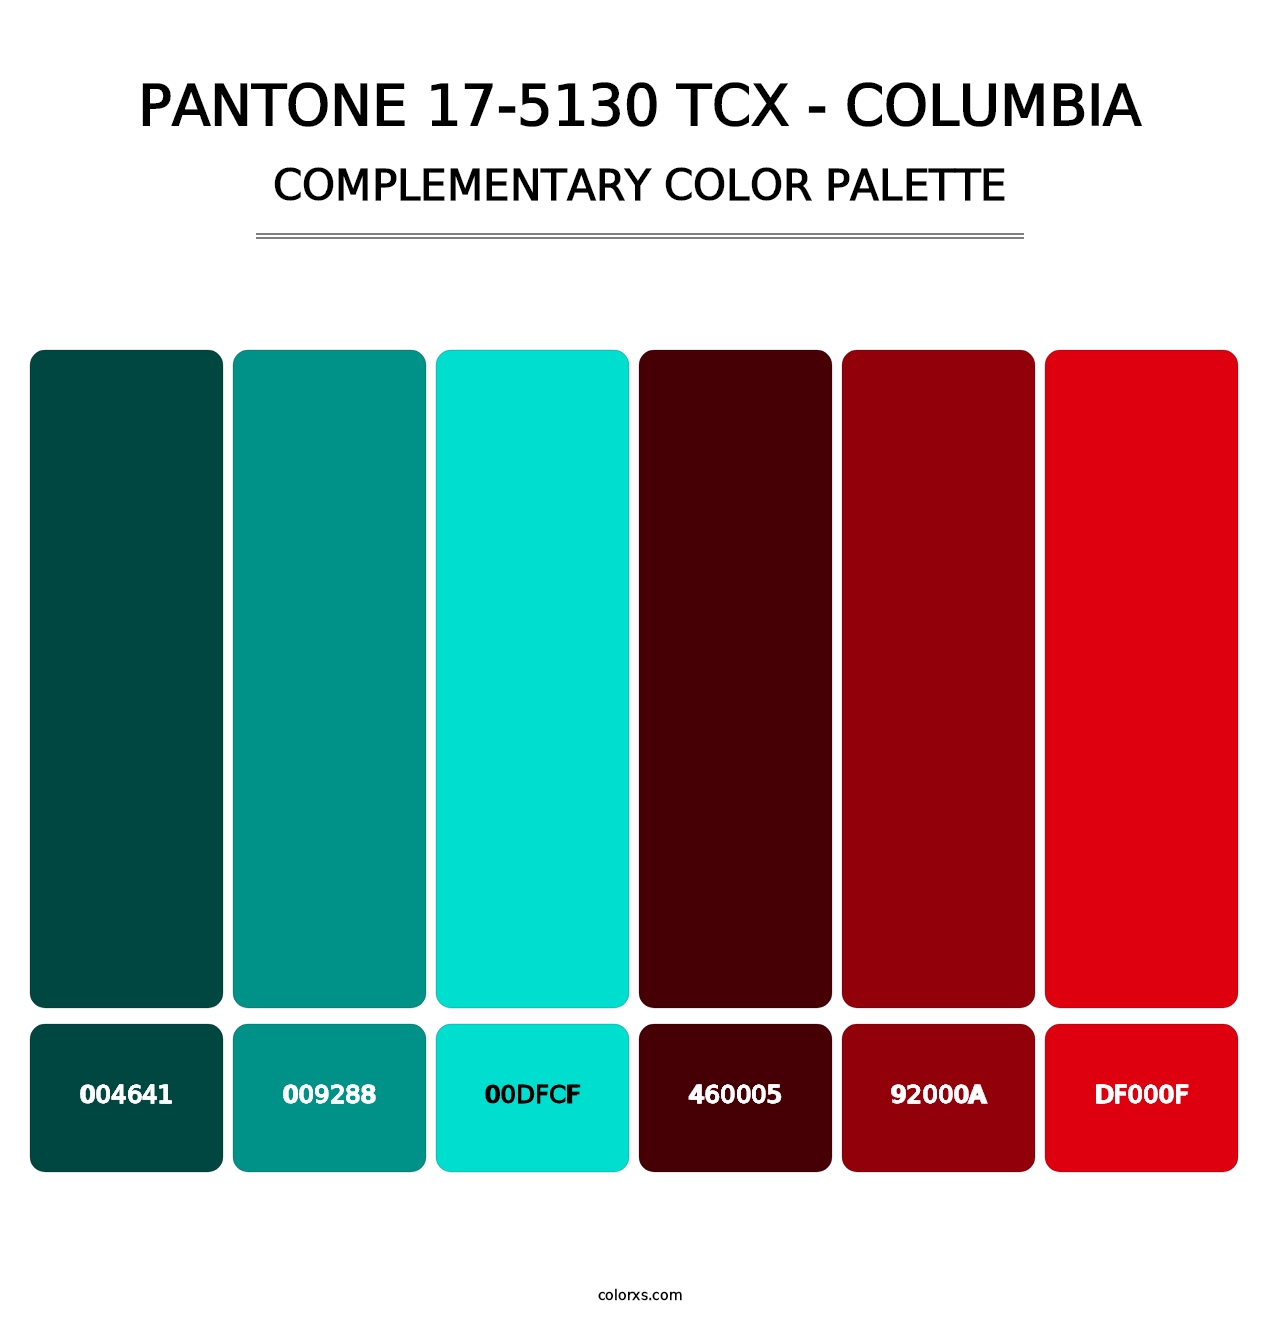 PANTONE 17-5130 TCX - Columbia - Complementary Color Palette